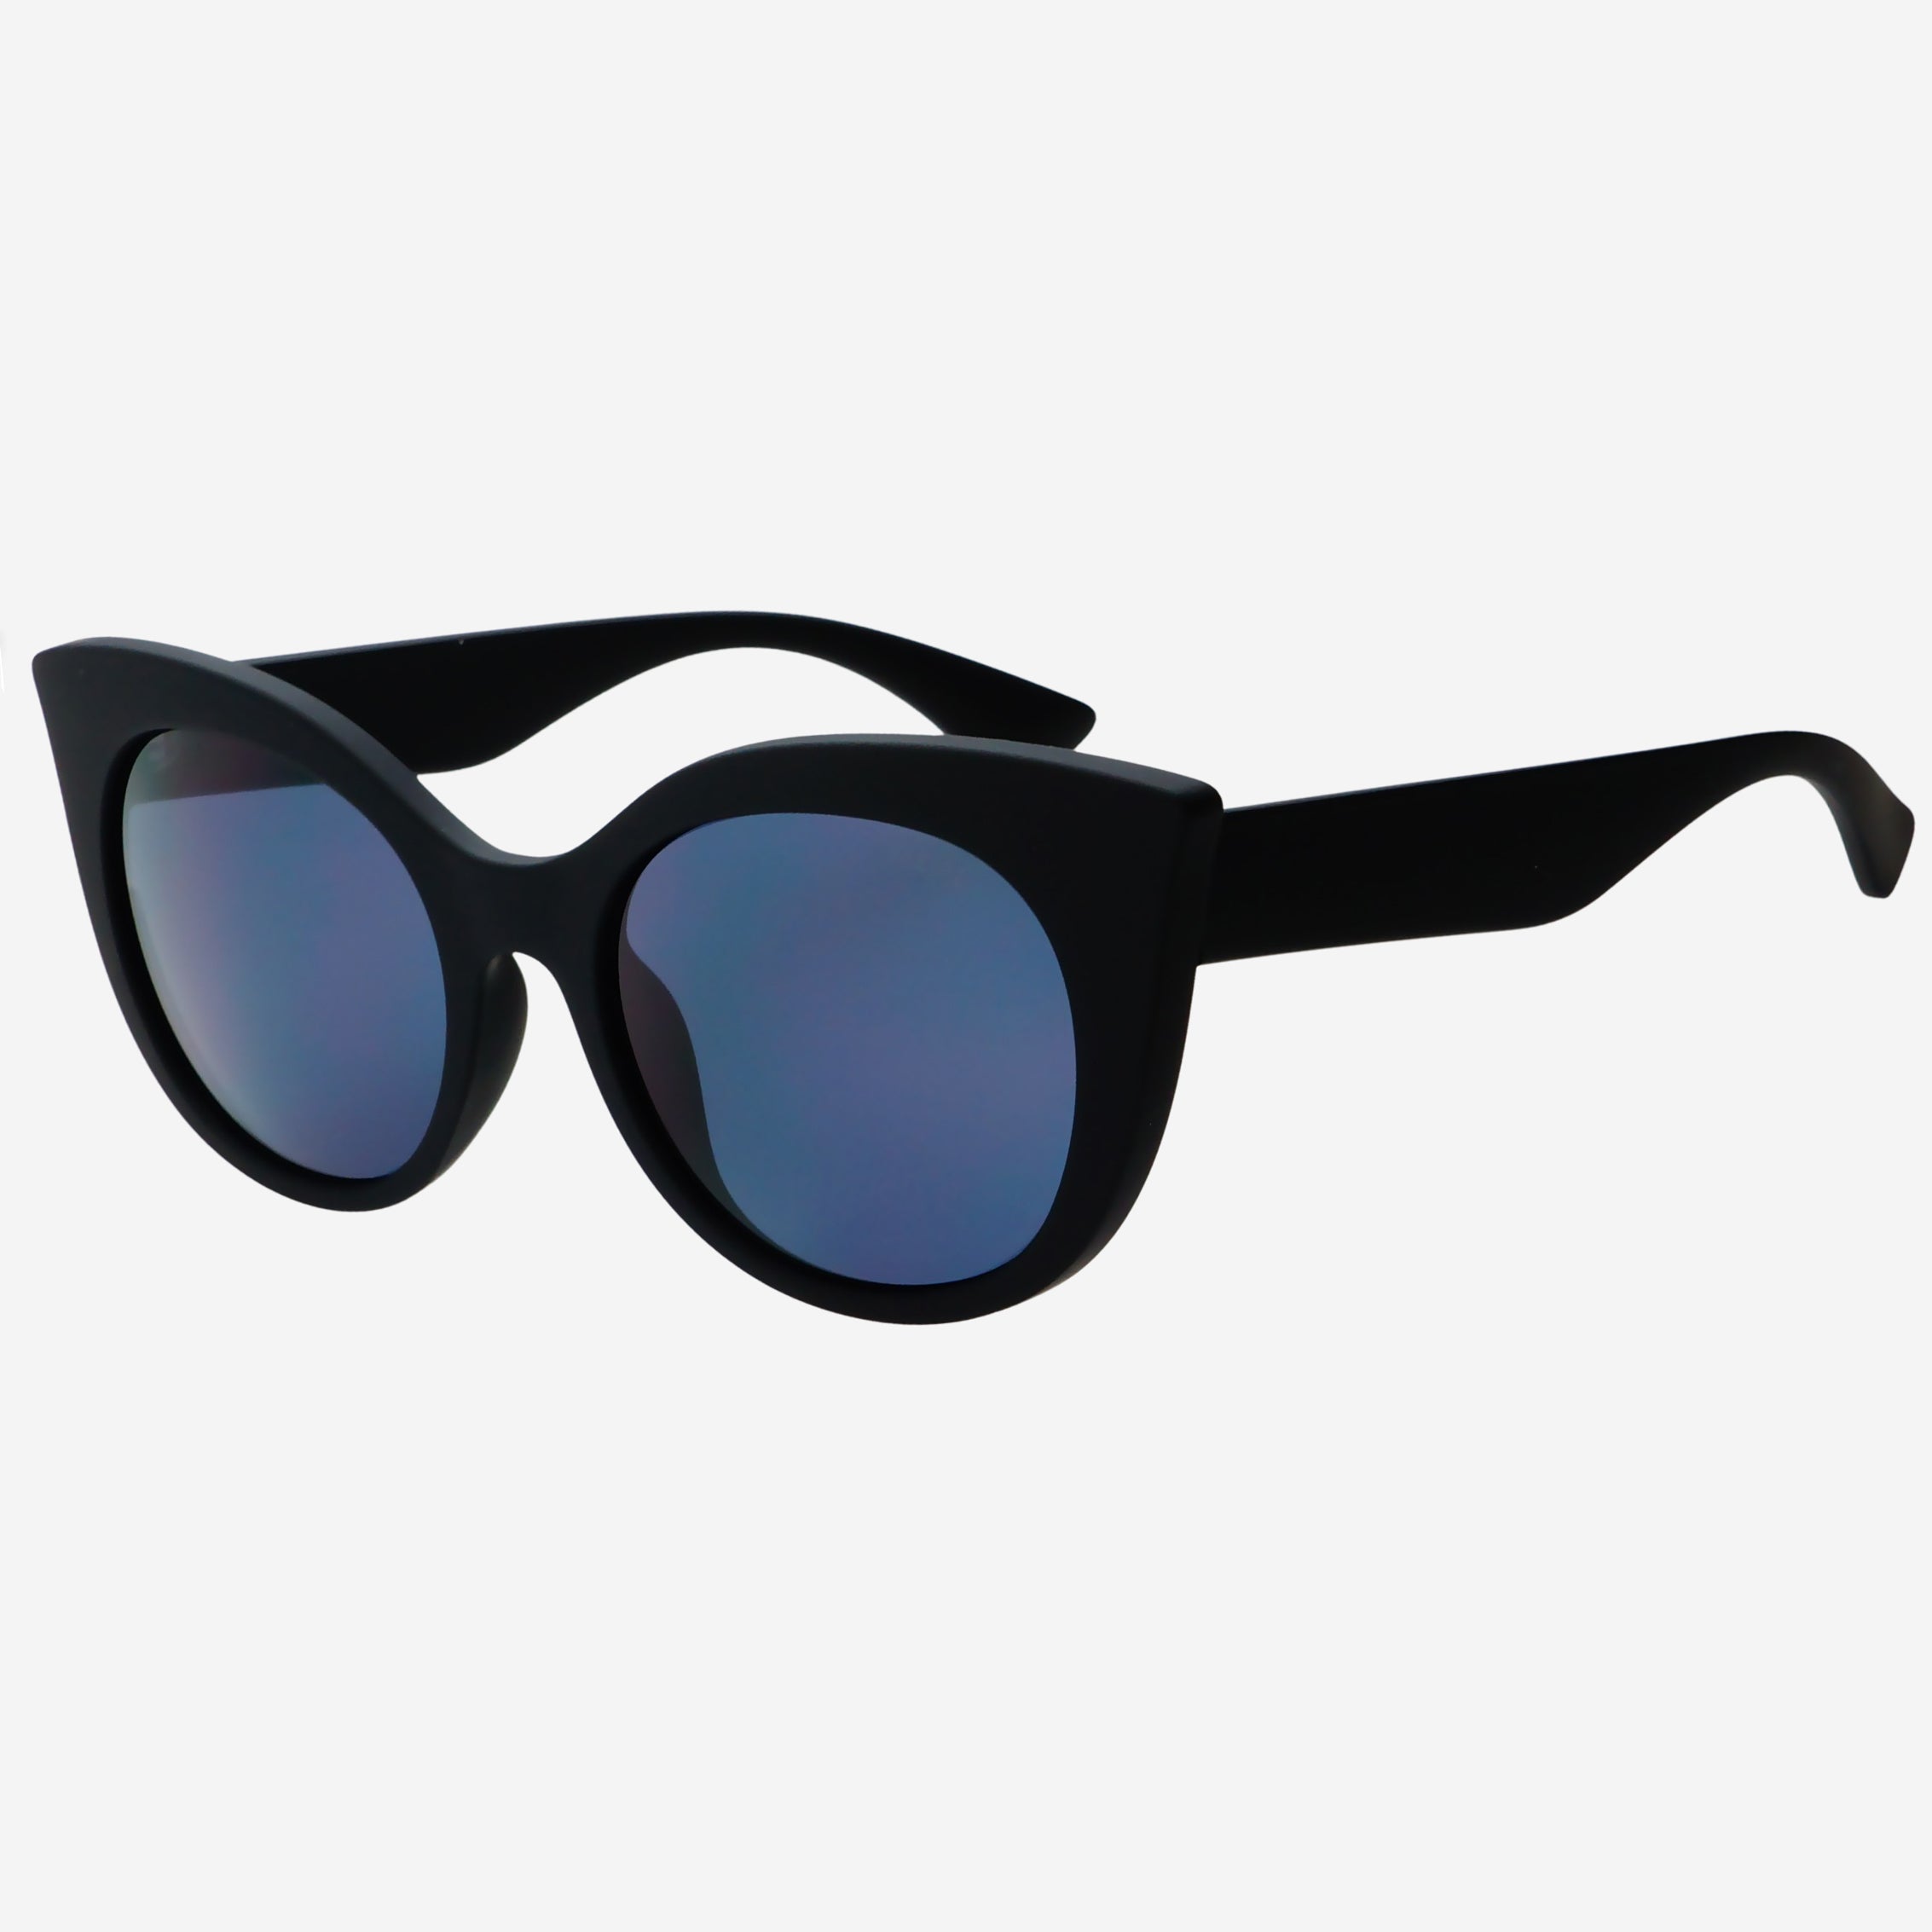 Sunglasses Round Eyewear Large Cat Roxy FREYRS by Womens Eye